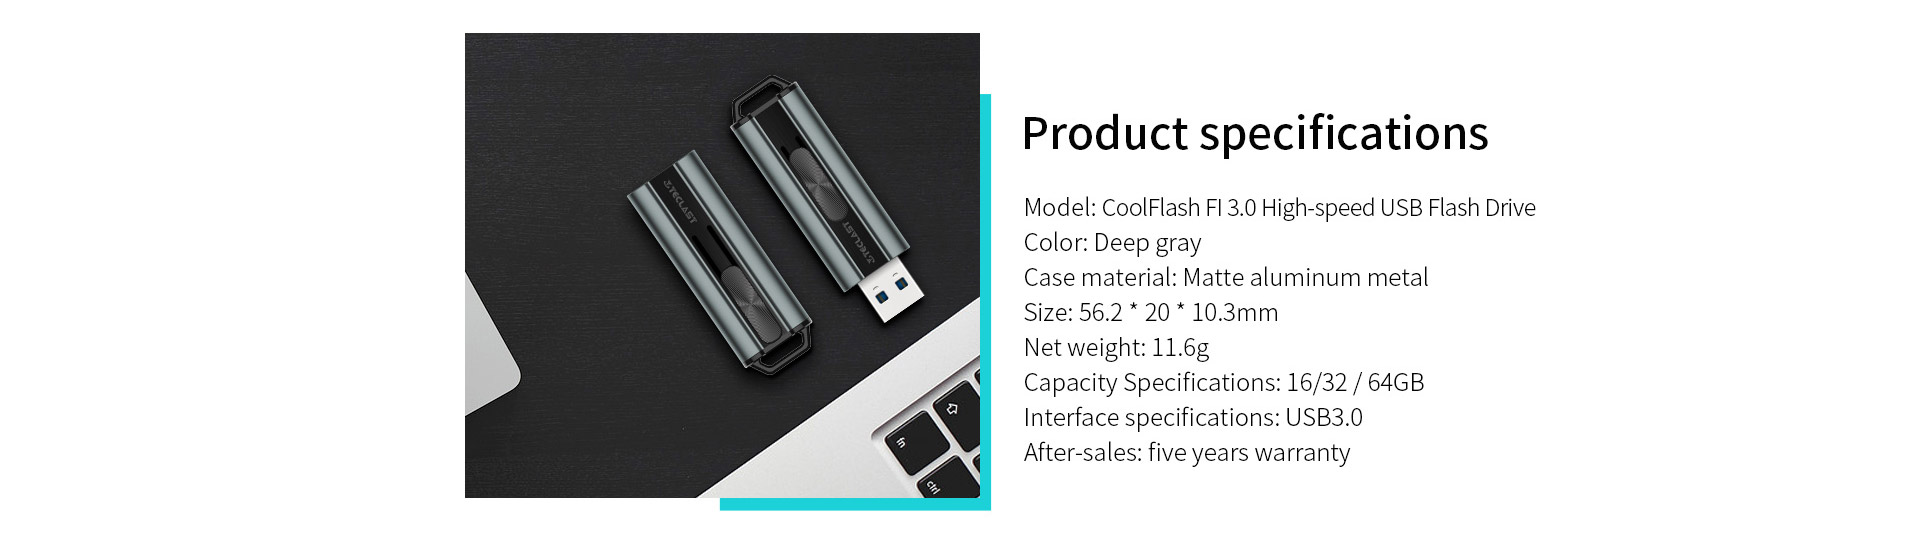 teclast coolflash fi3.0 waterproof high speed usb 3.0 flash drive